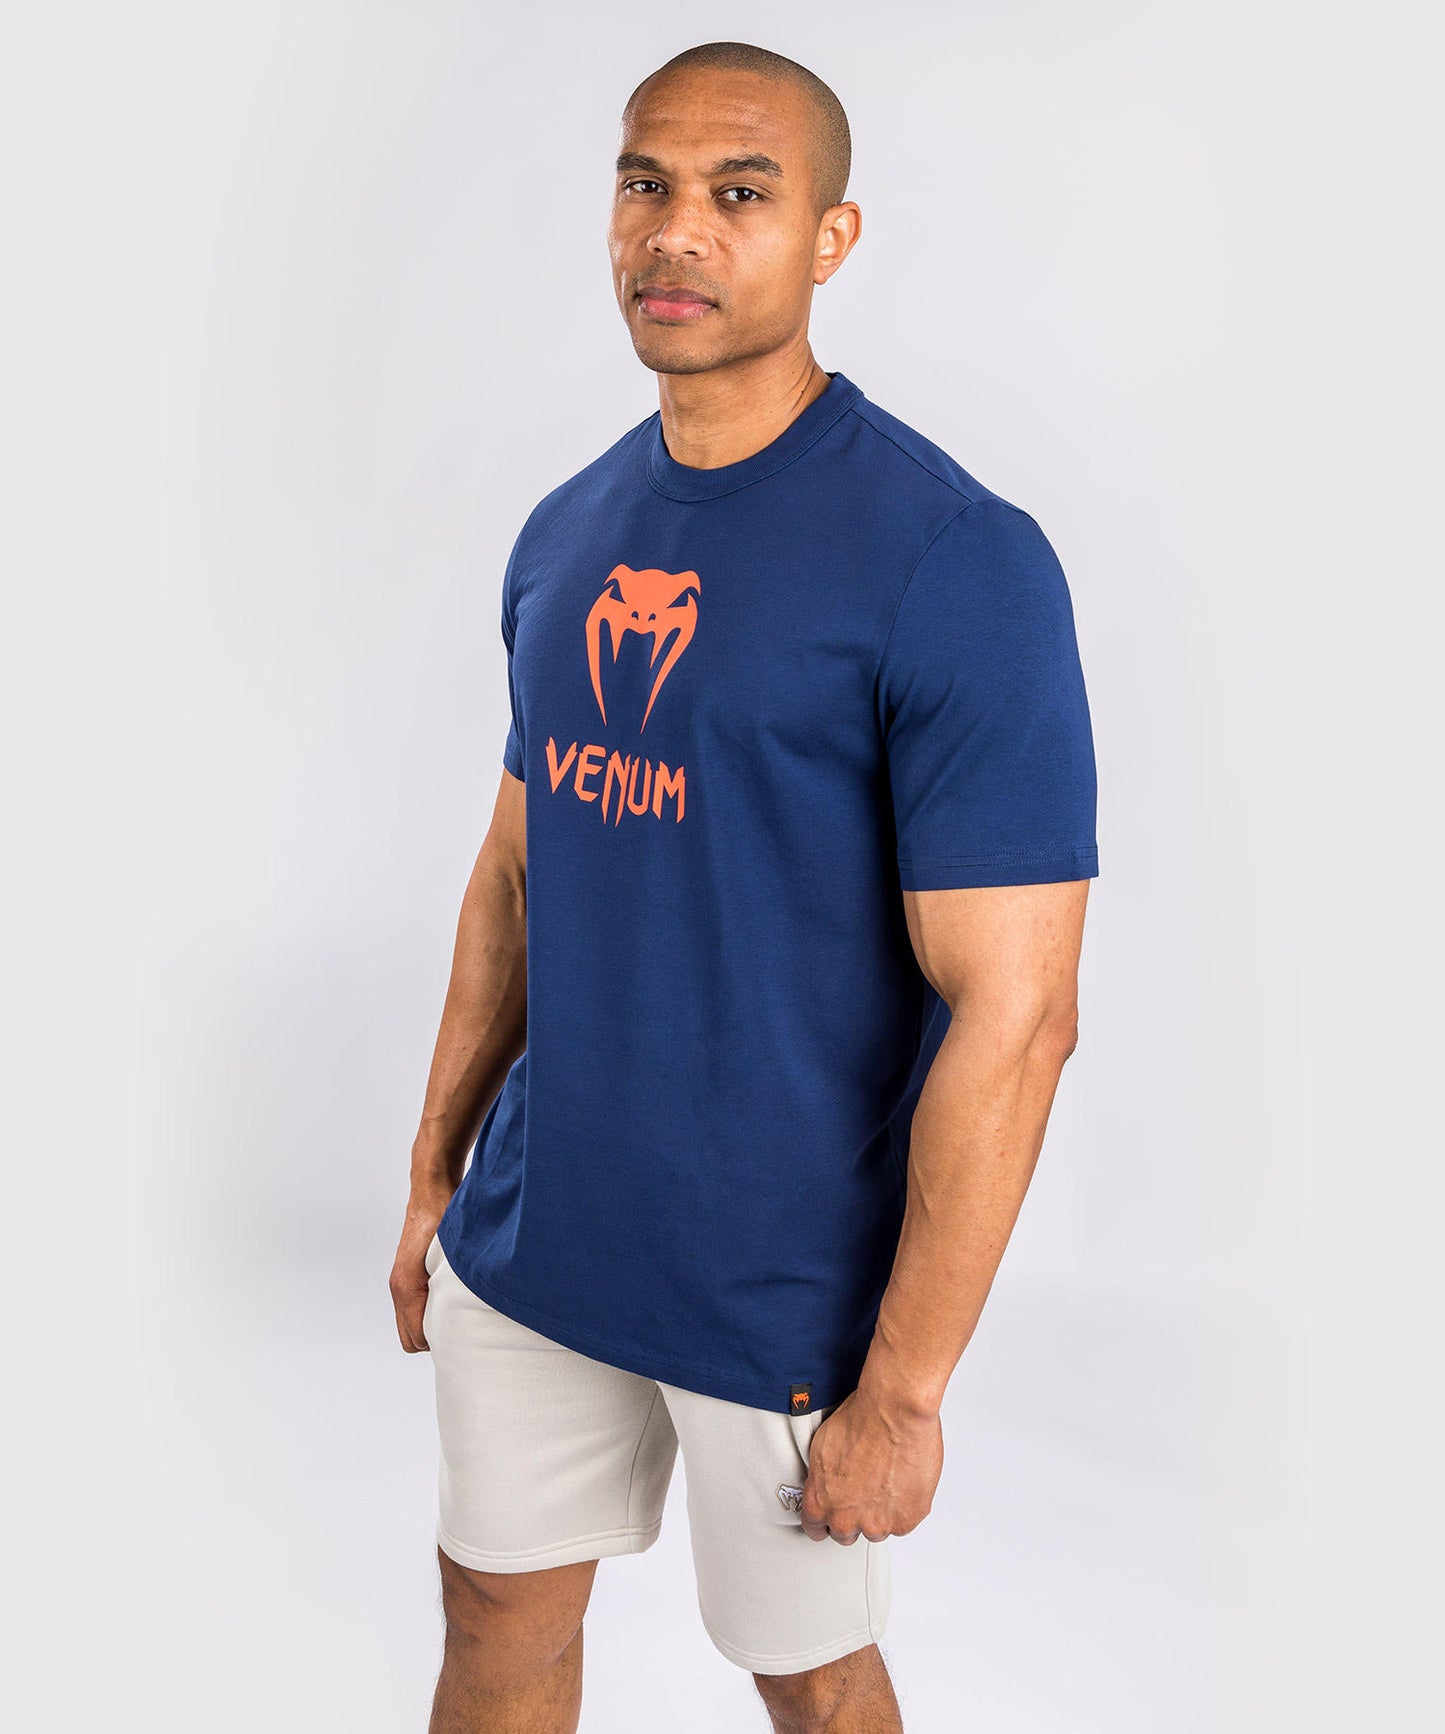 Venum Classic T-Shirt - Navy Blue/Orange